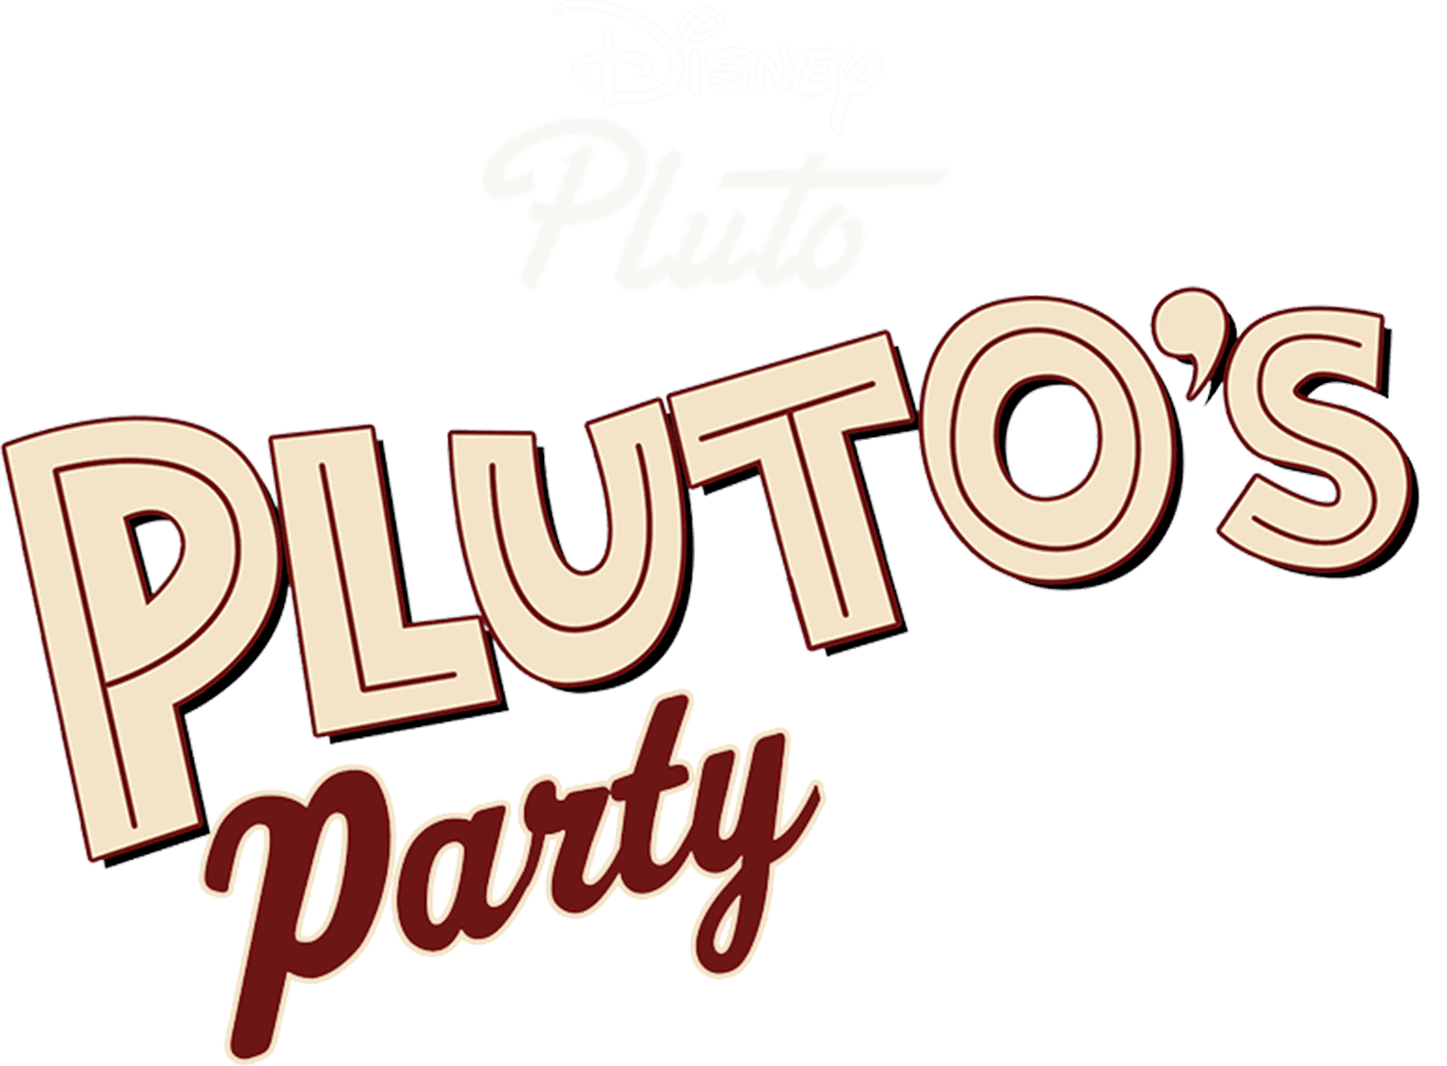 Pluto's Party logo